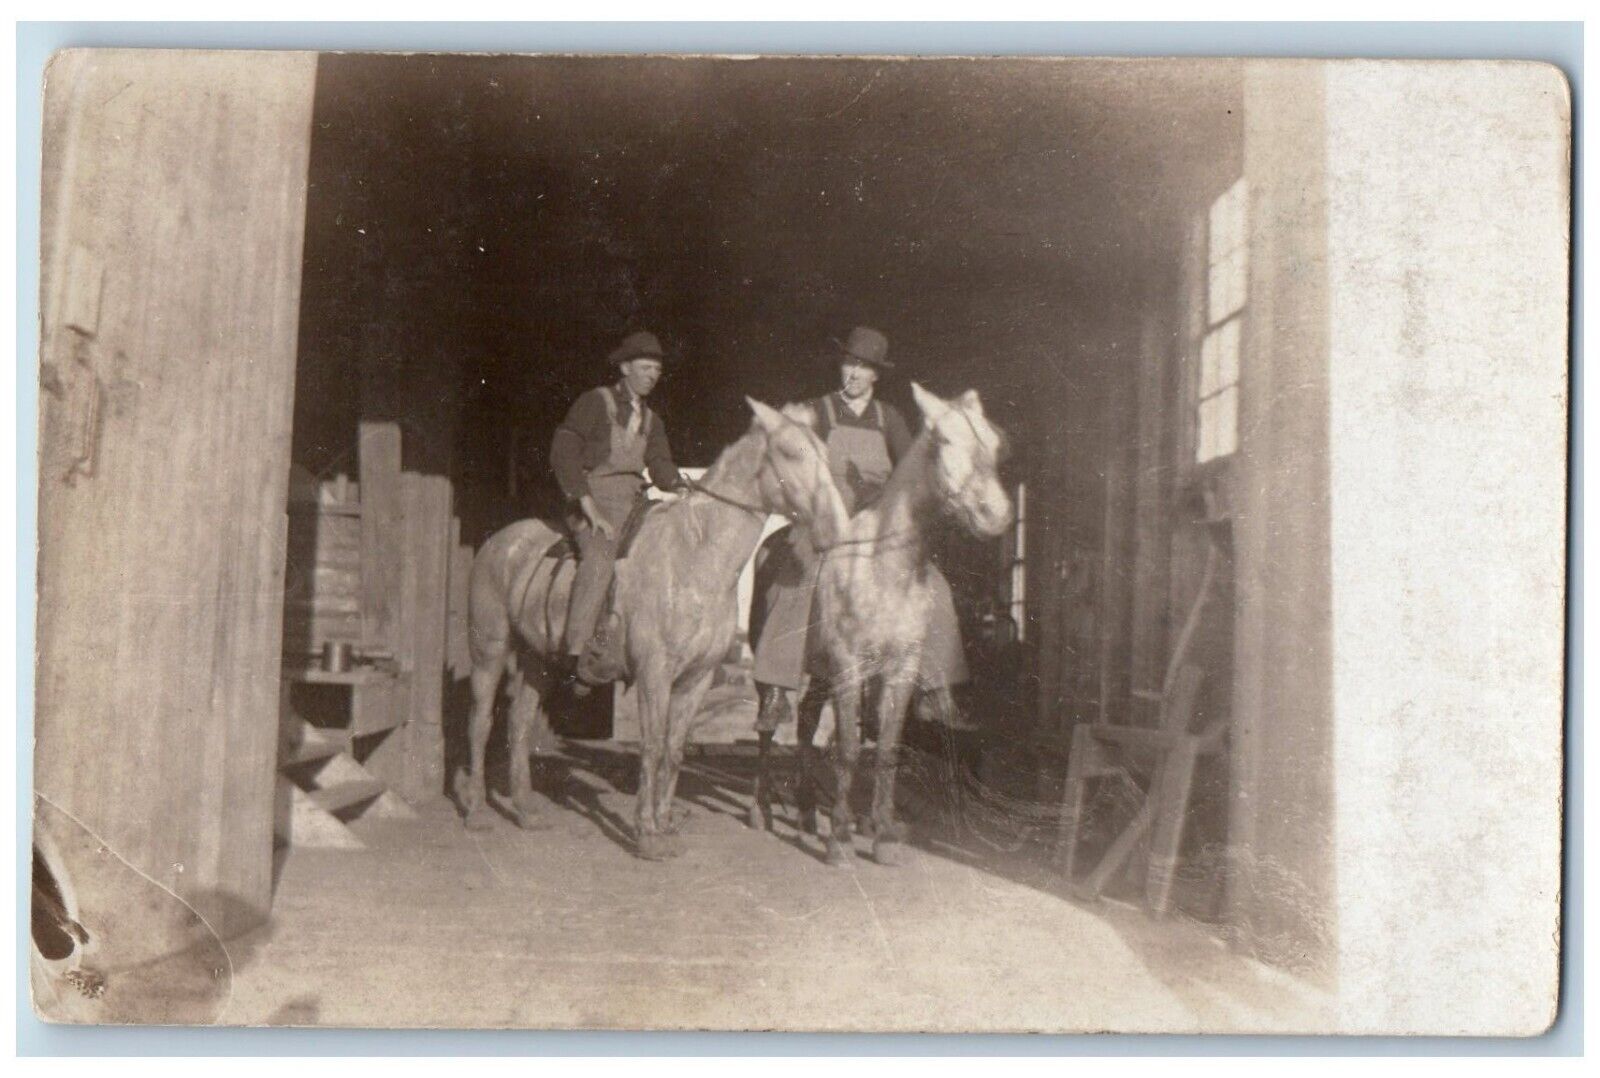 Emmons Minnesota MN Postcard RPPC Photo Cowboys And Horse Ride c1910's Antique